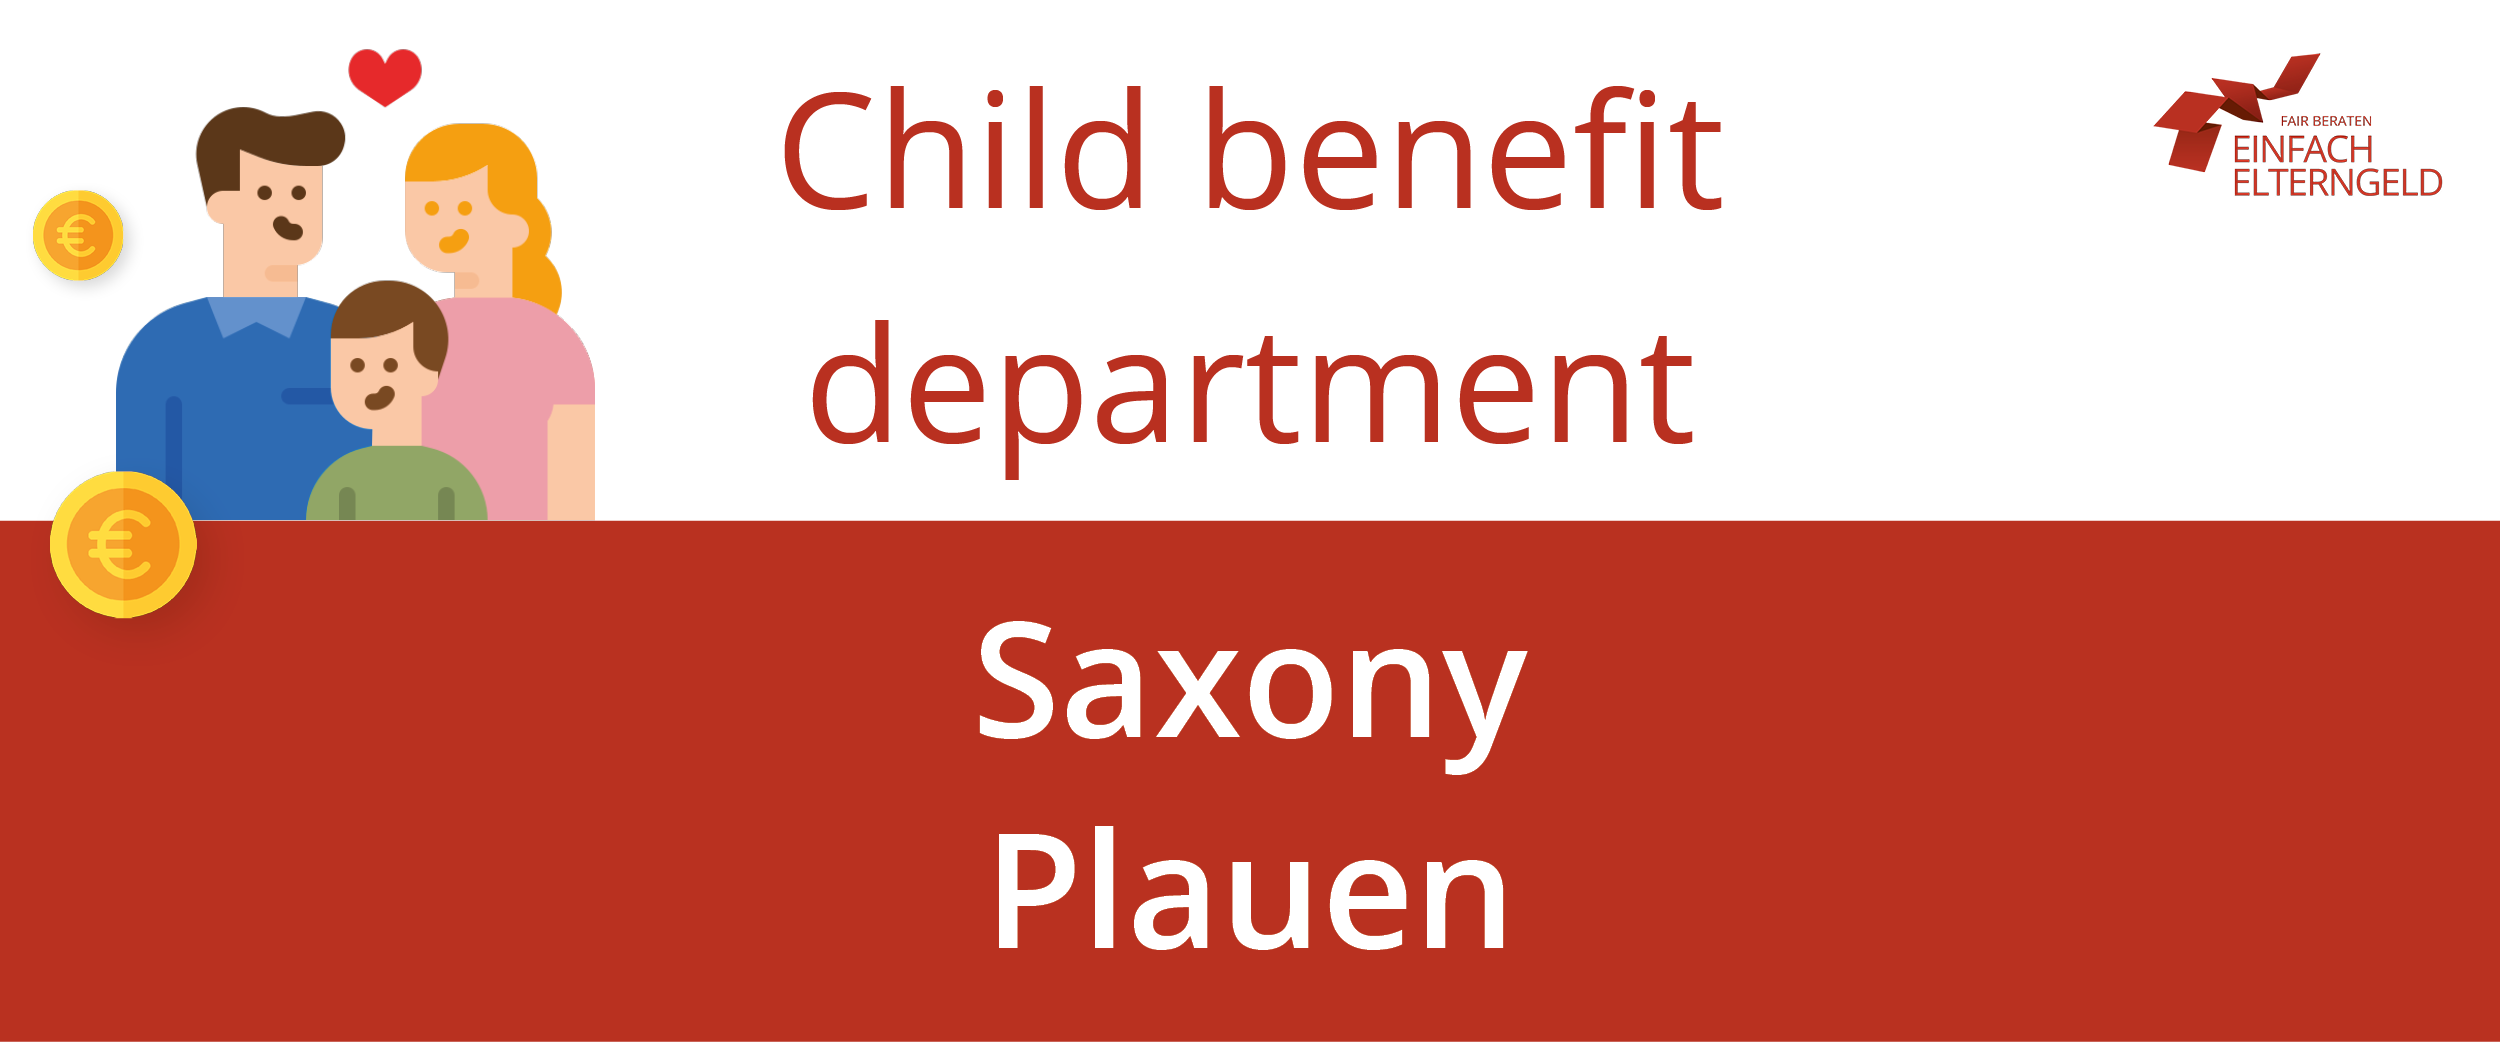 We present you the Child benefit department Saxony Plauen.